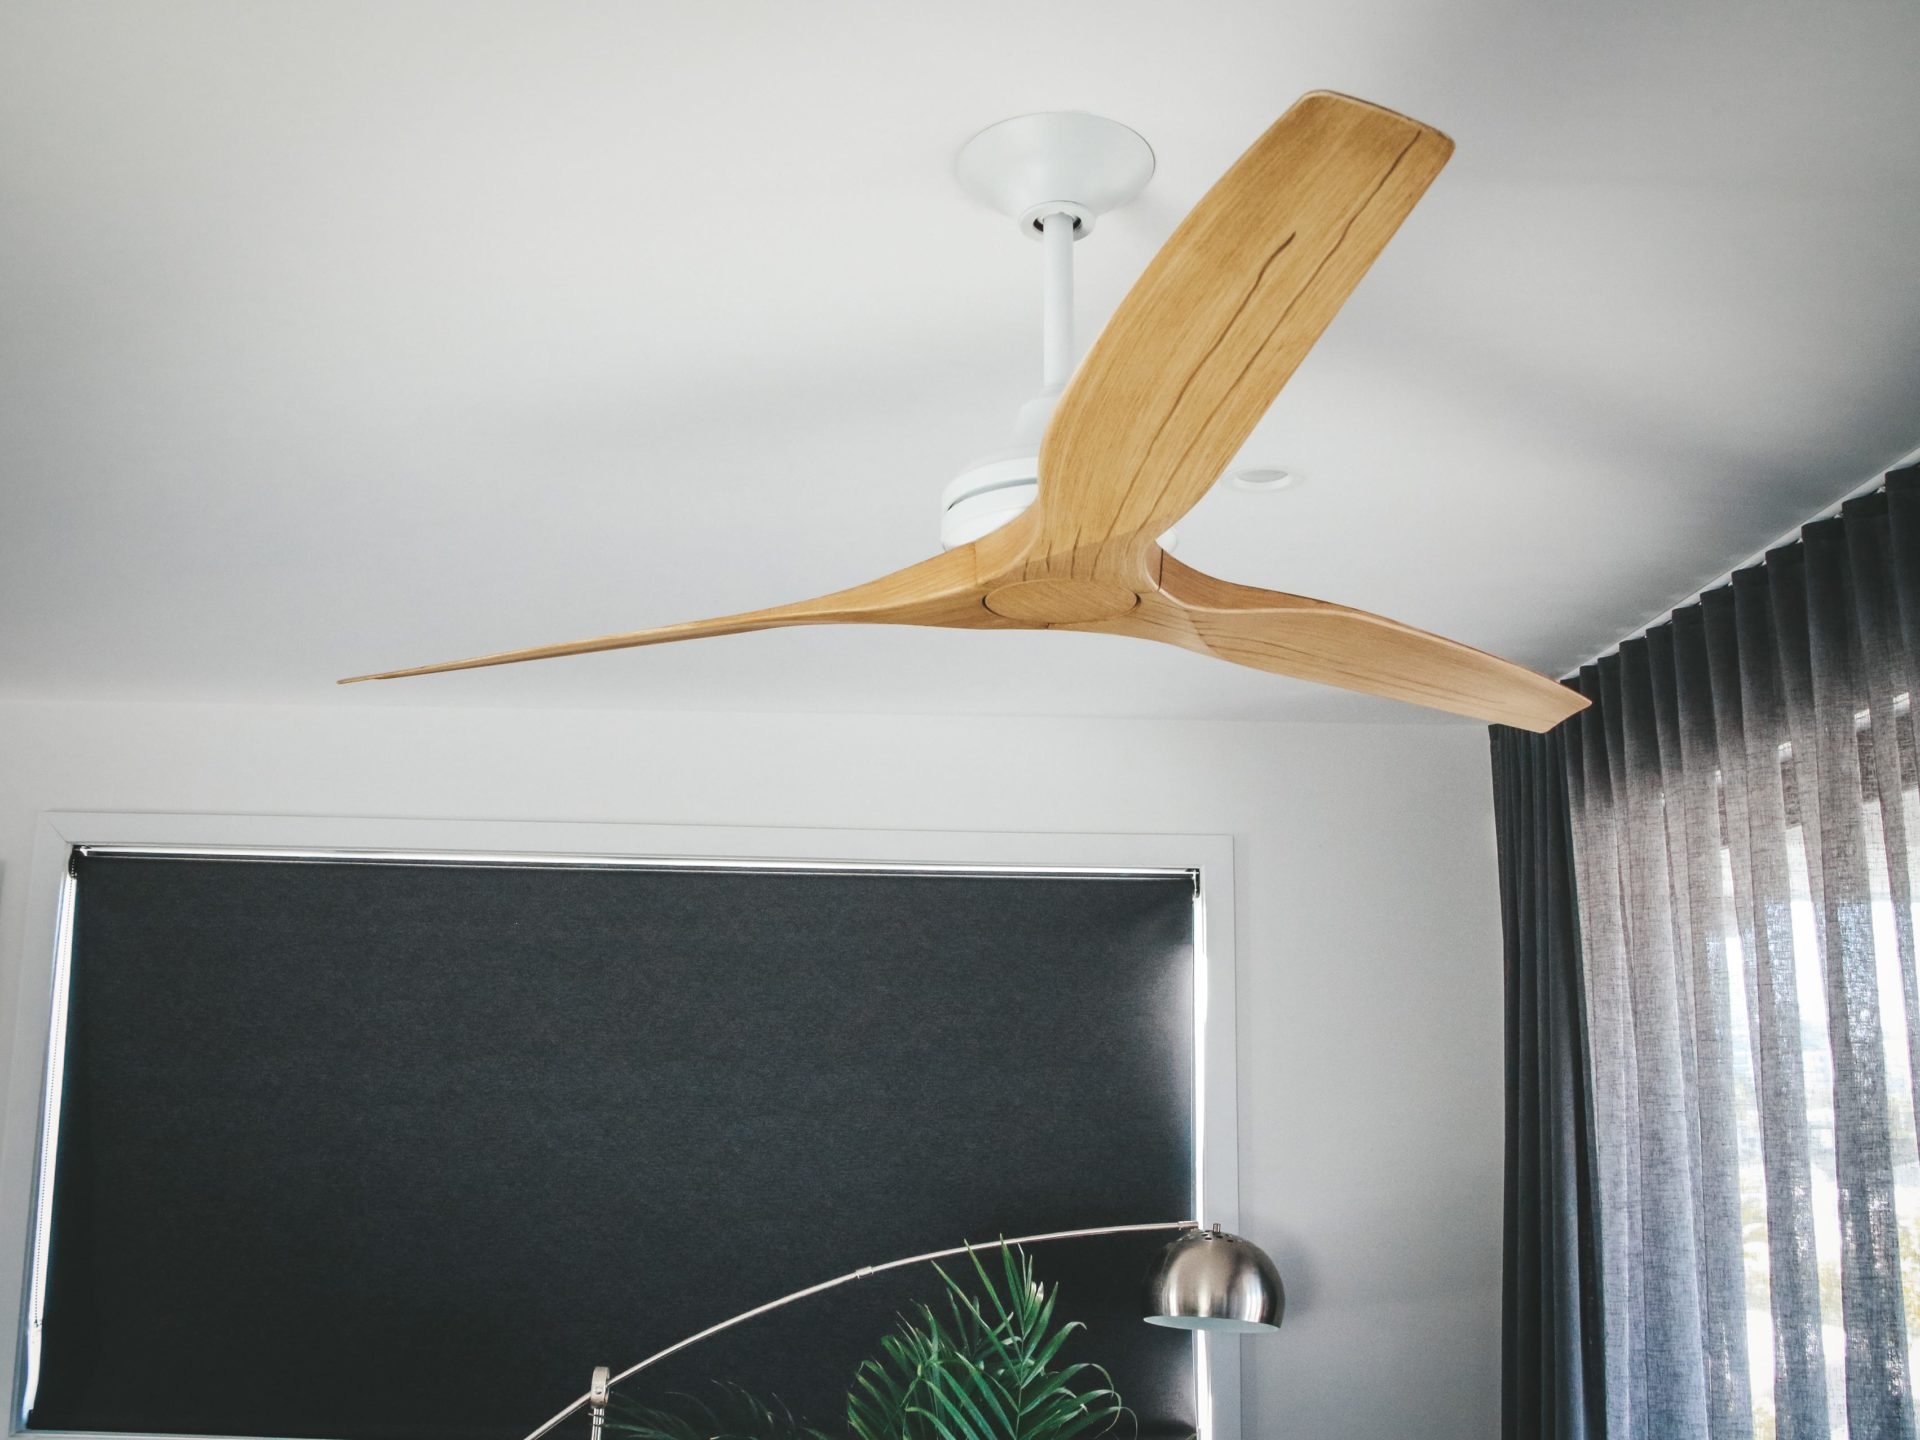 4 steps to choose a ceiling fan